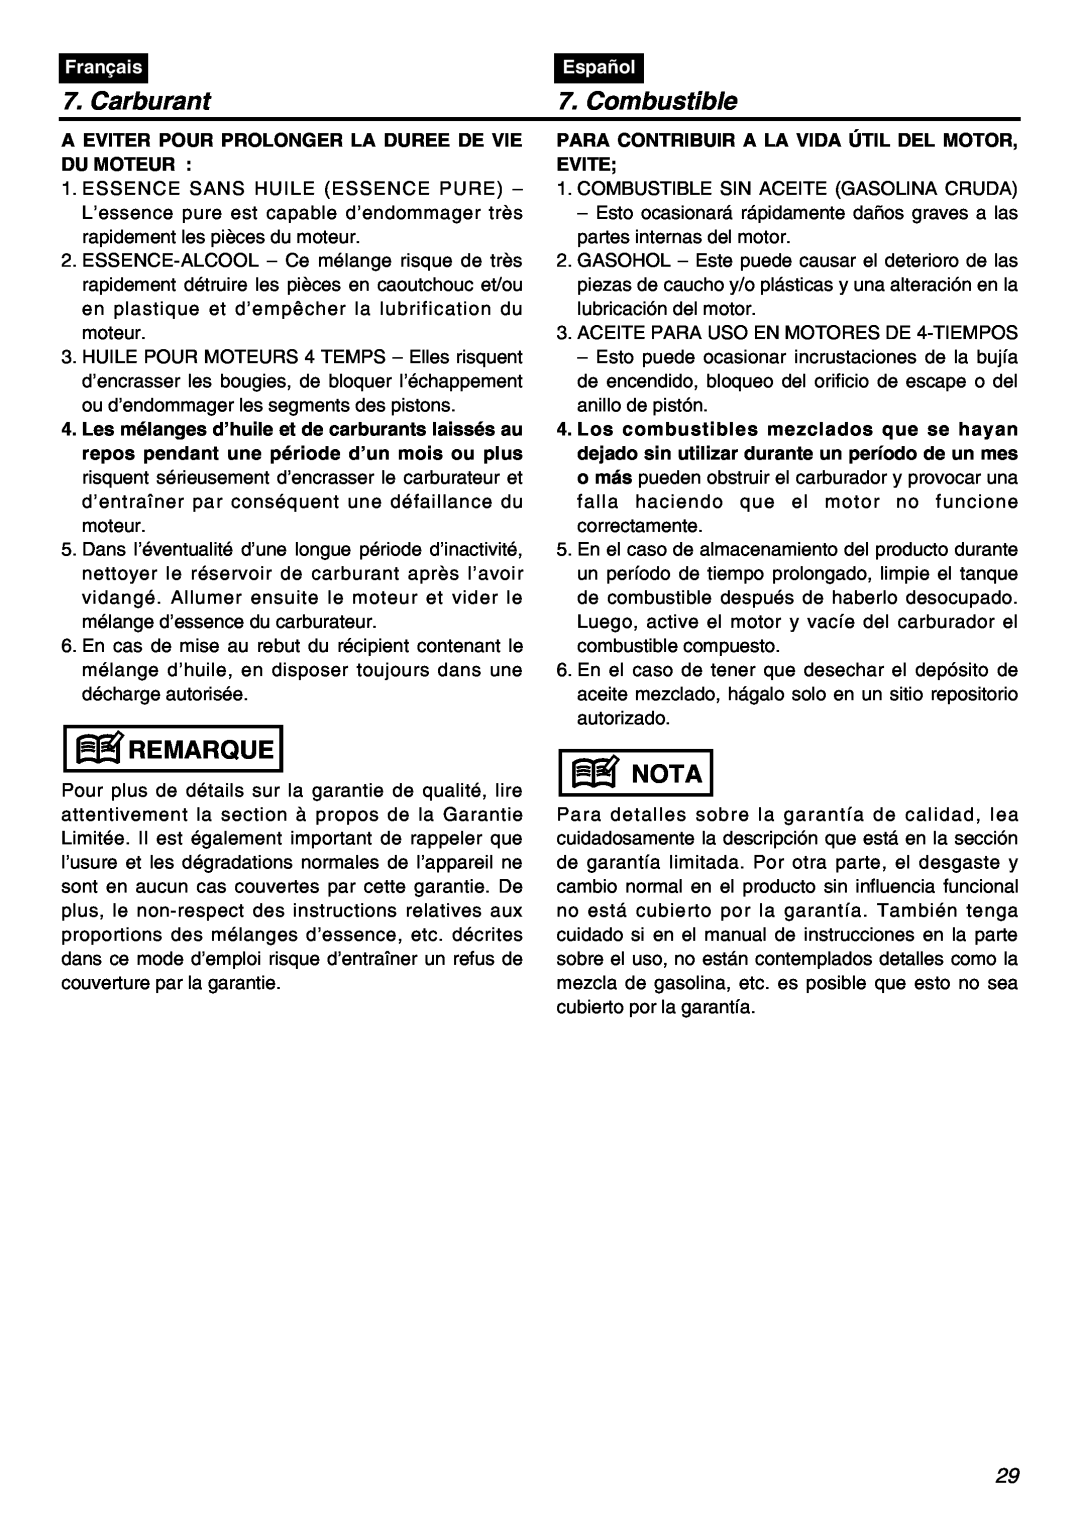 Zenoah EBZ7100-CA, EBZ7100RH-CA manual Carburant, Combustible, Remarque, Nota, Français, Español 